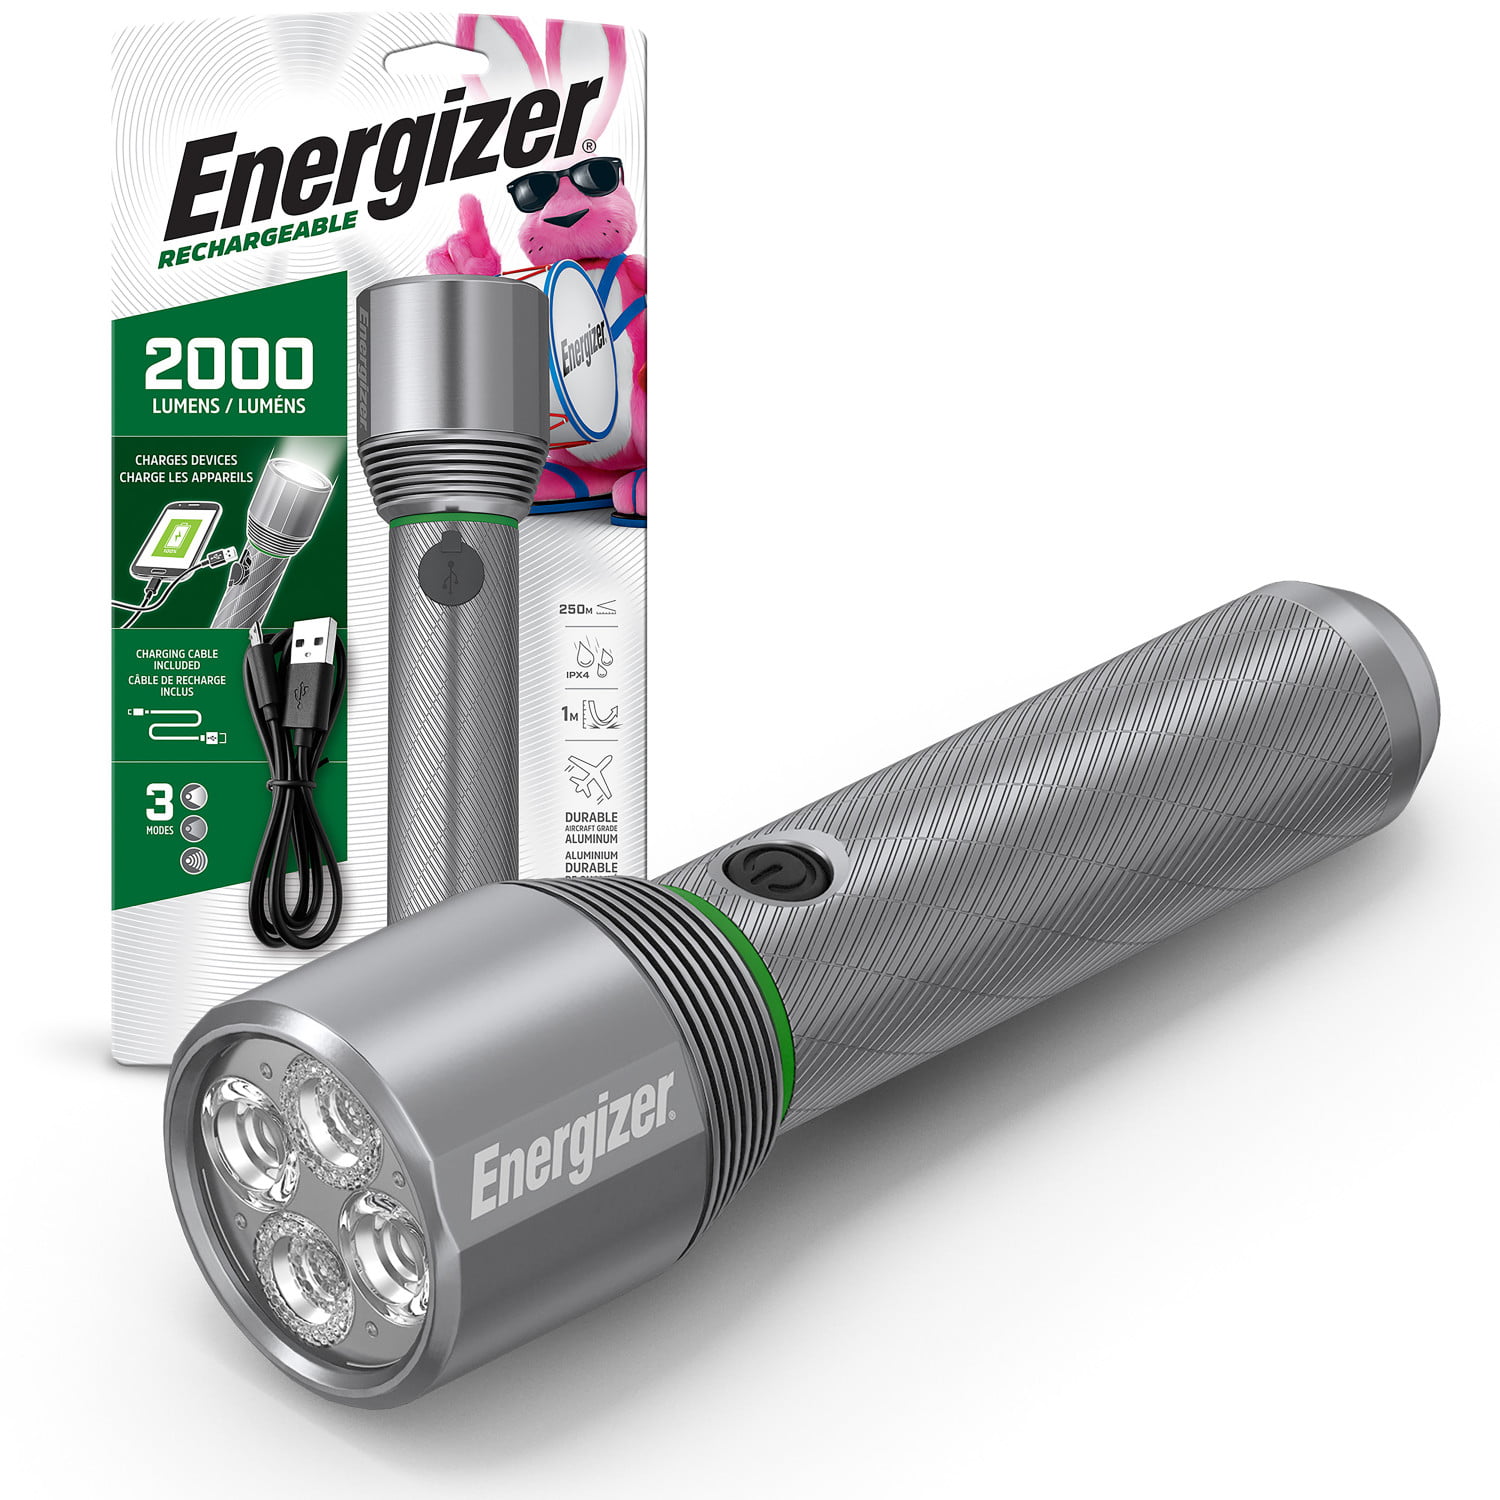 Energizer Torch Hi-Tech 4aaa Energi LED Flashlight Torch Lamp Light 